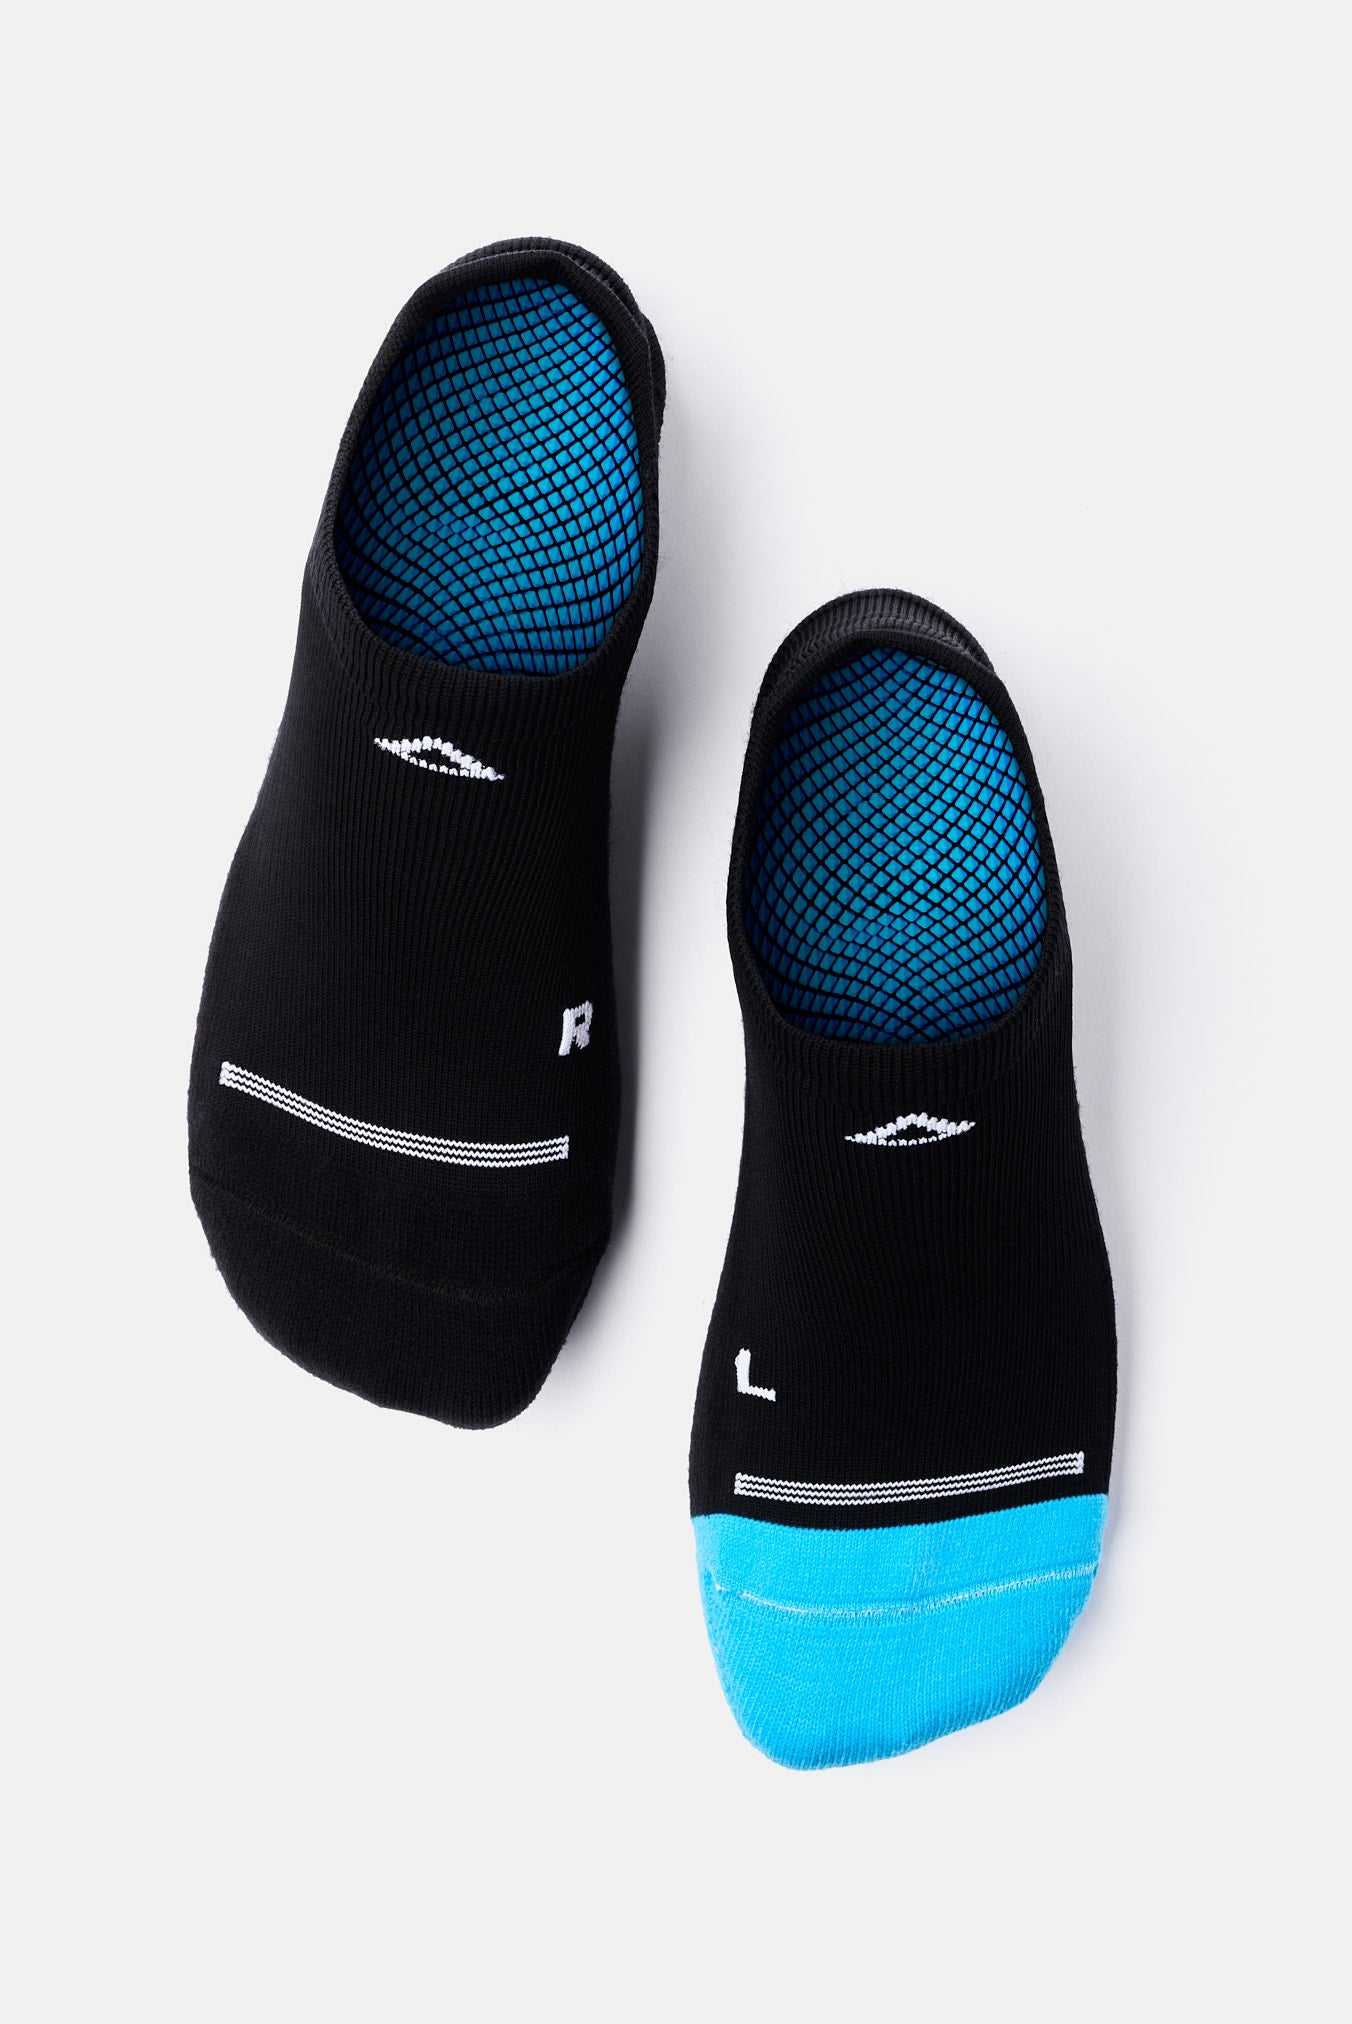 Naboso Recovery Socks with Stimulating Texture – Naboso Technology, Inc.